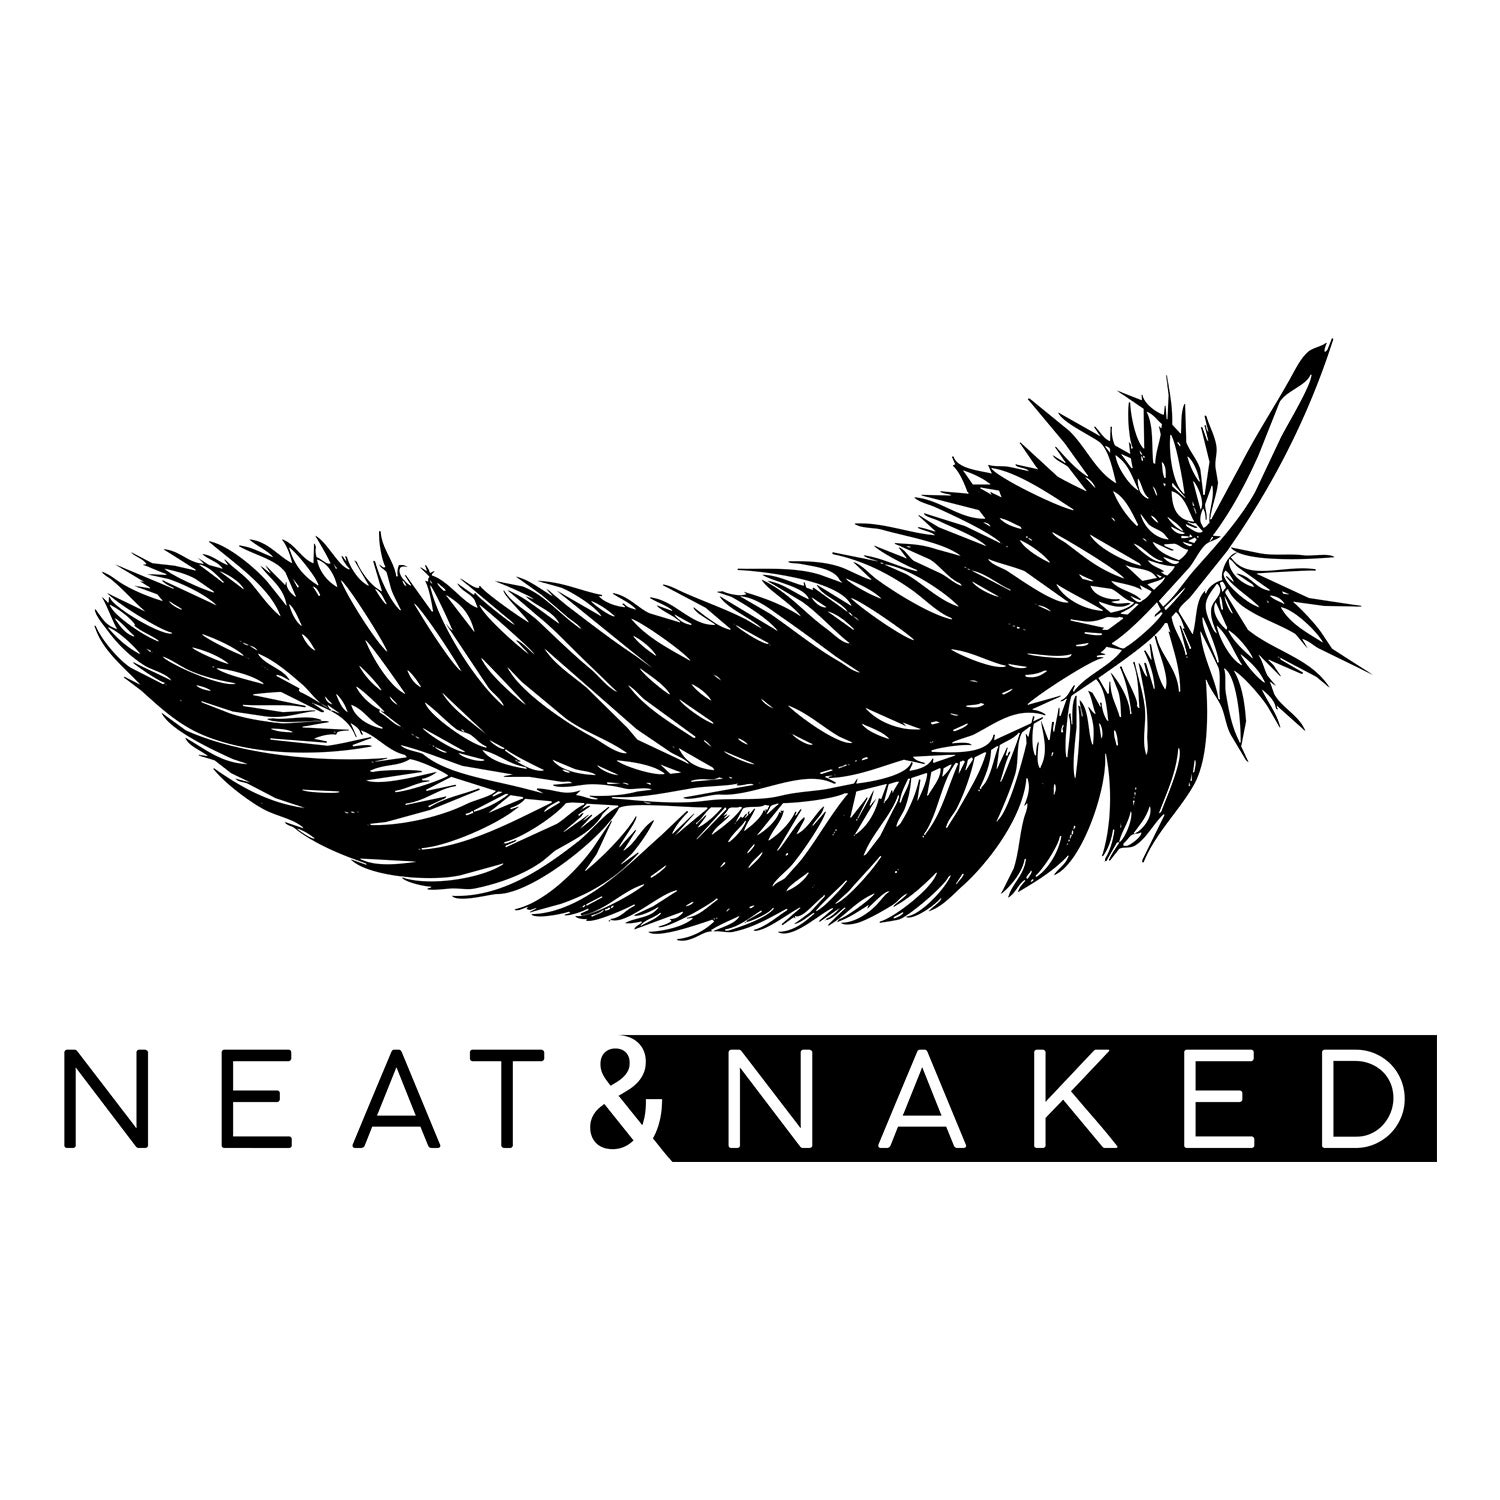 Neat & naked